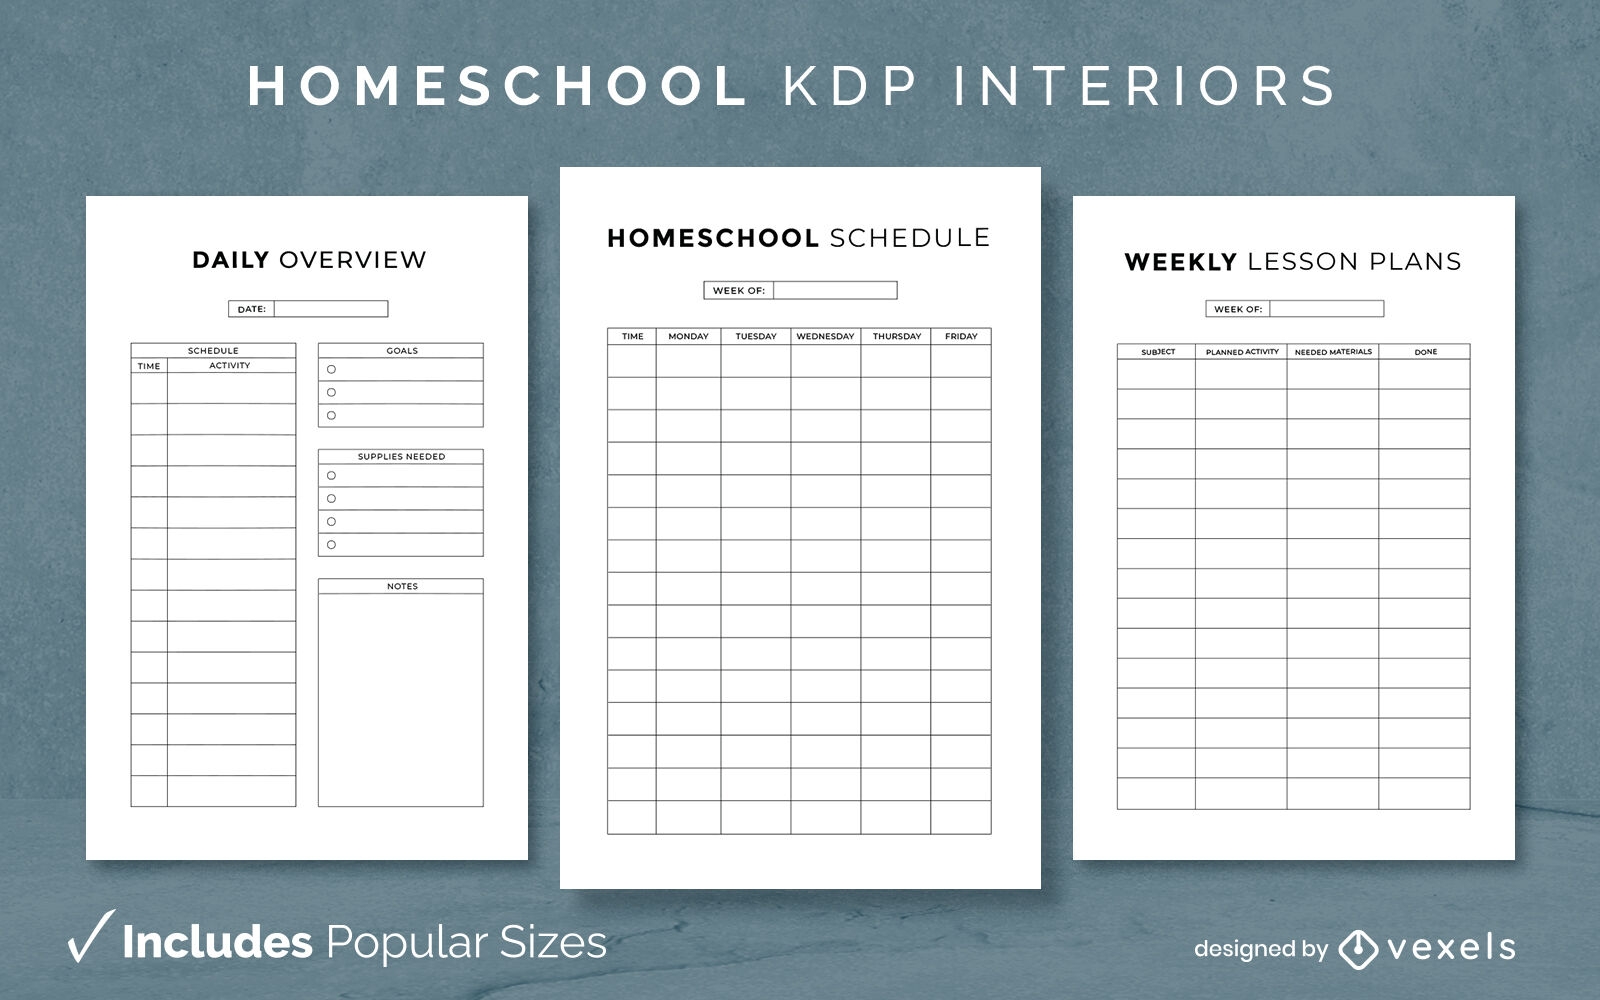 Homeschool KDP interior design